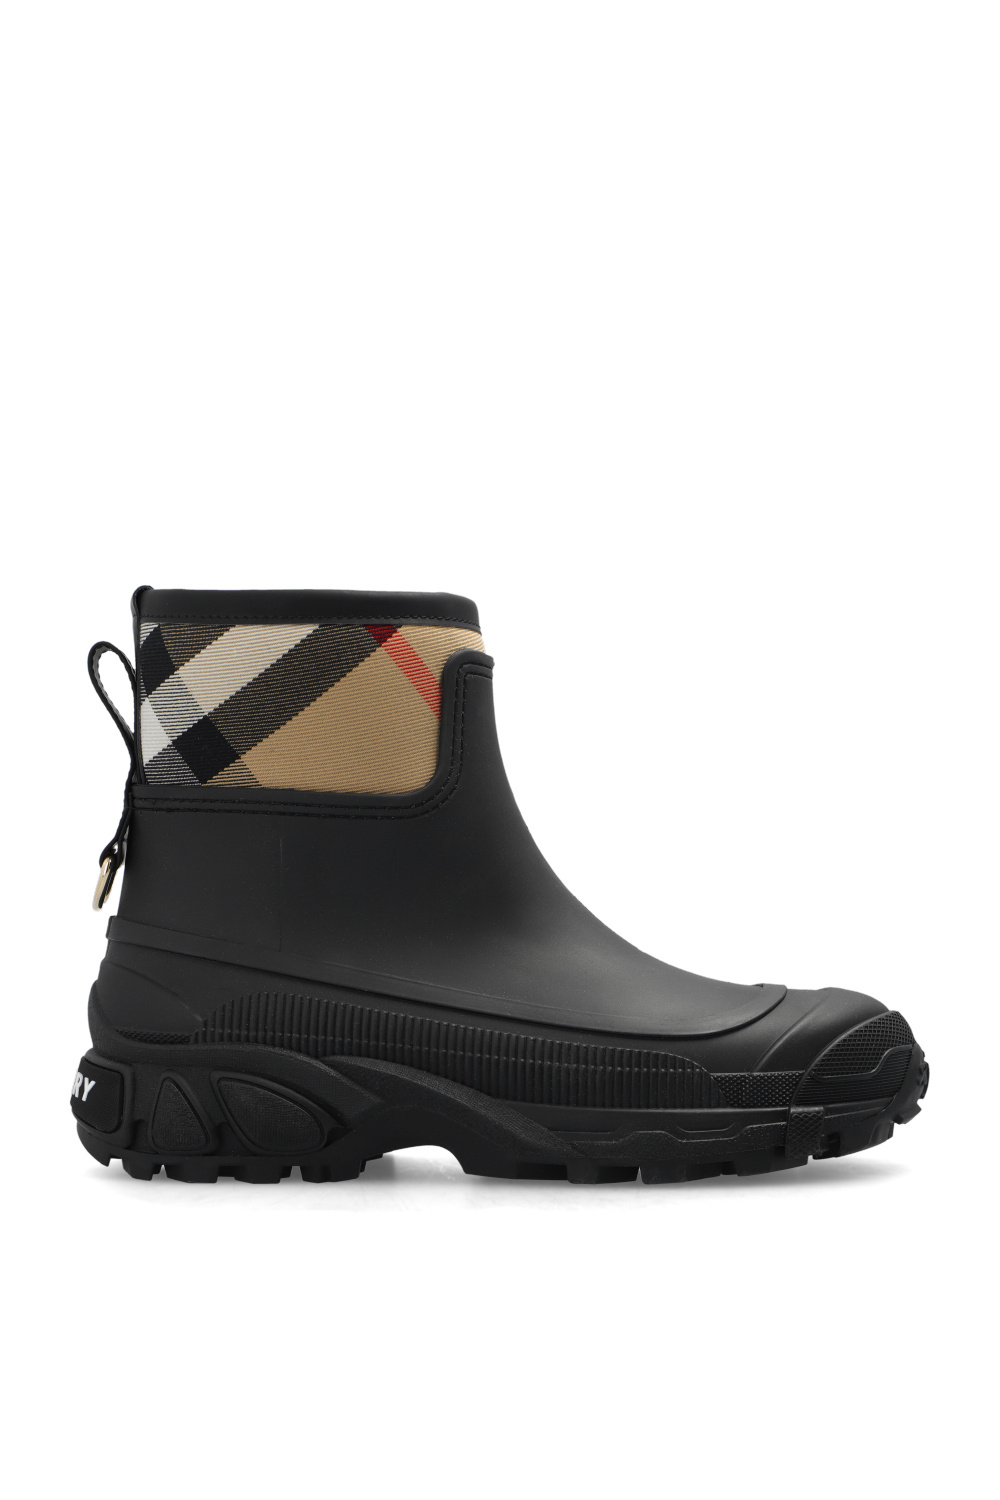 Burberry 'Ryan' rain boots | Women's Shoes | Vitkac